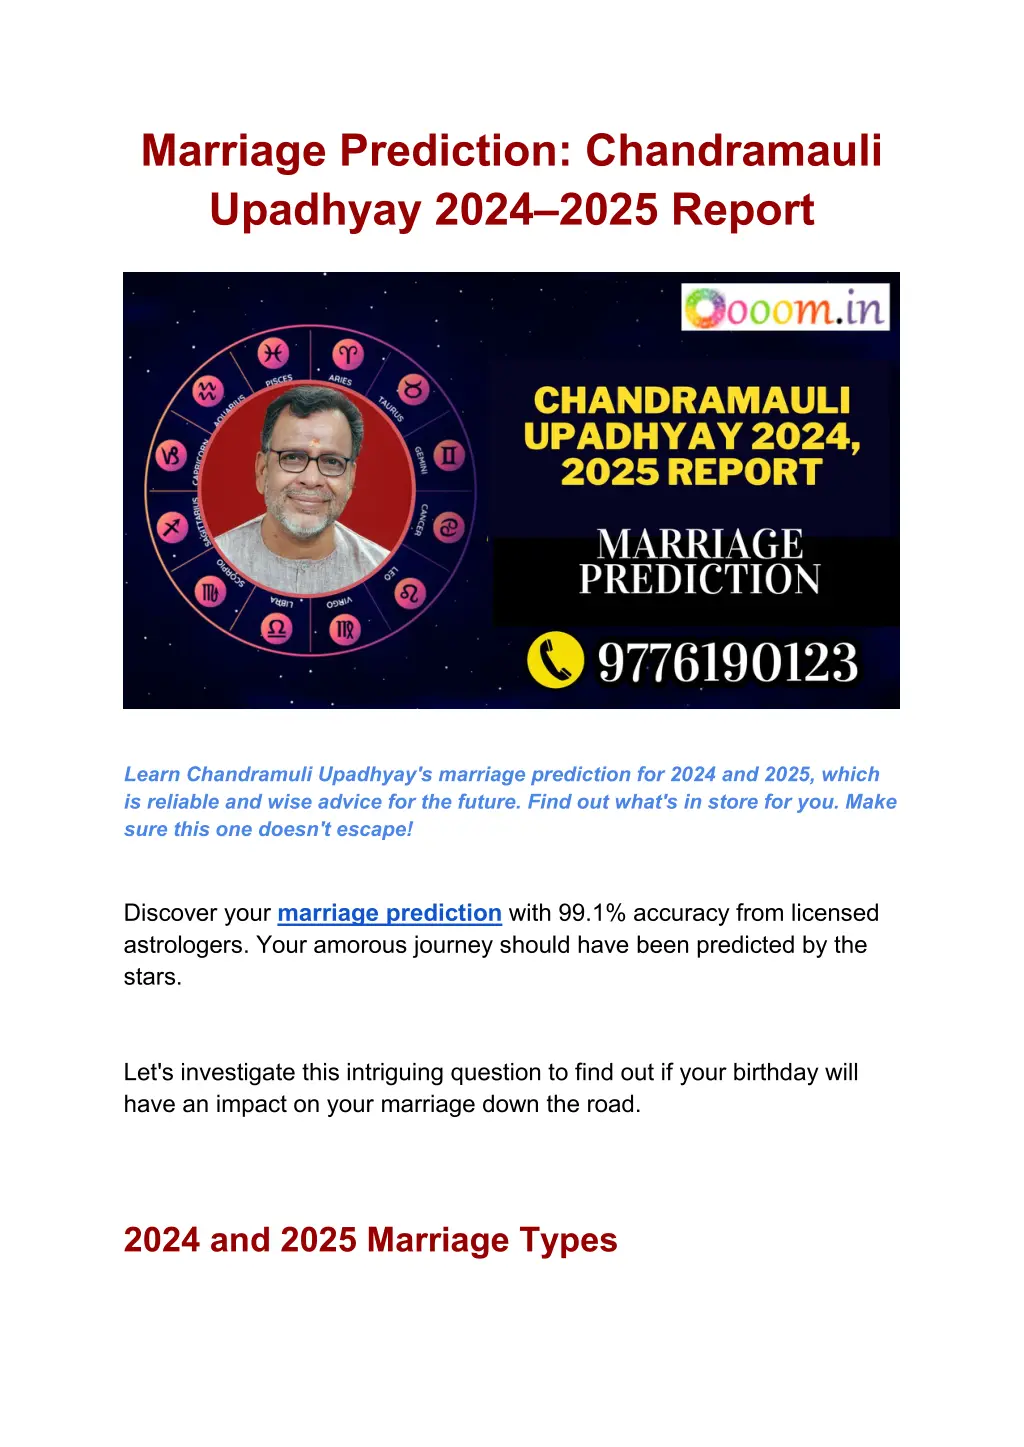 marriage prediction chandramauli upadhyay 2024